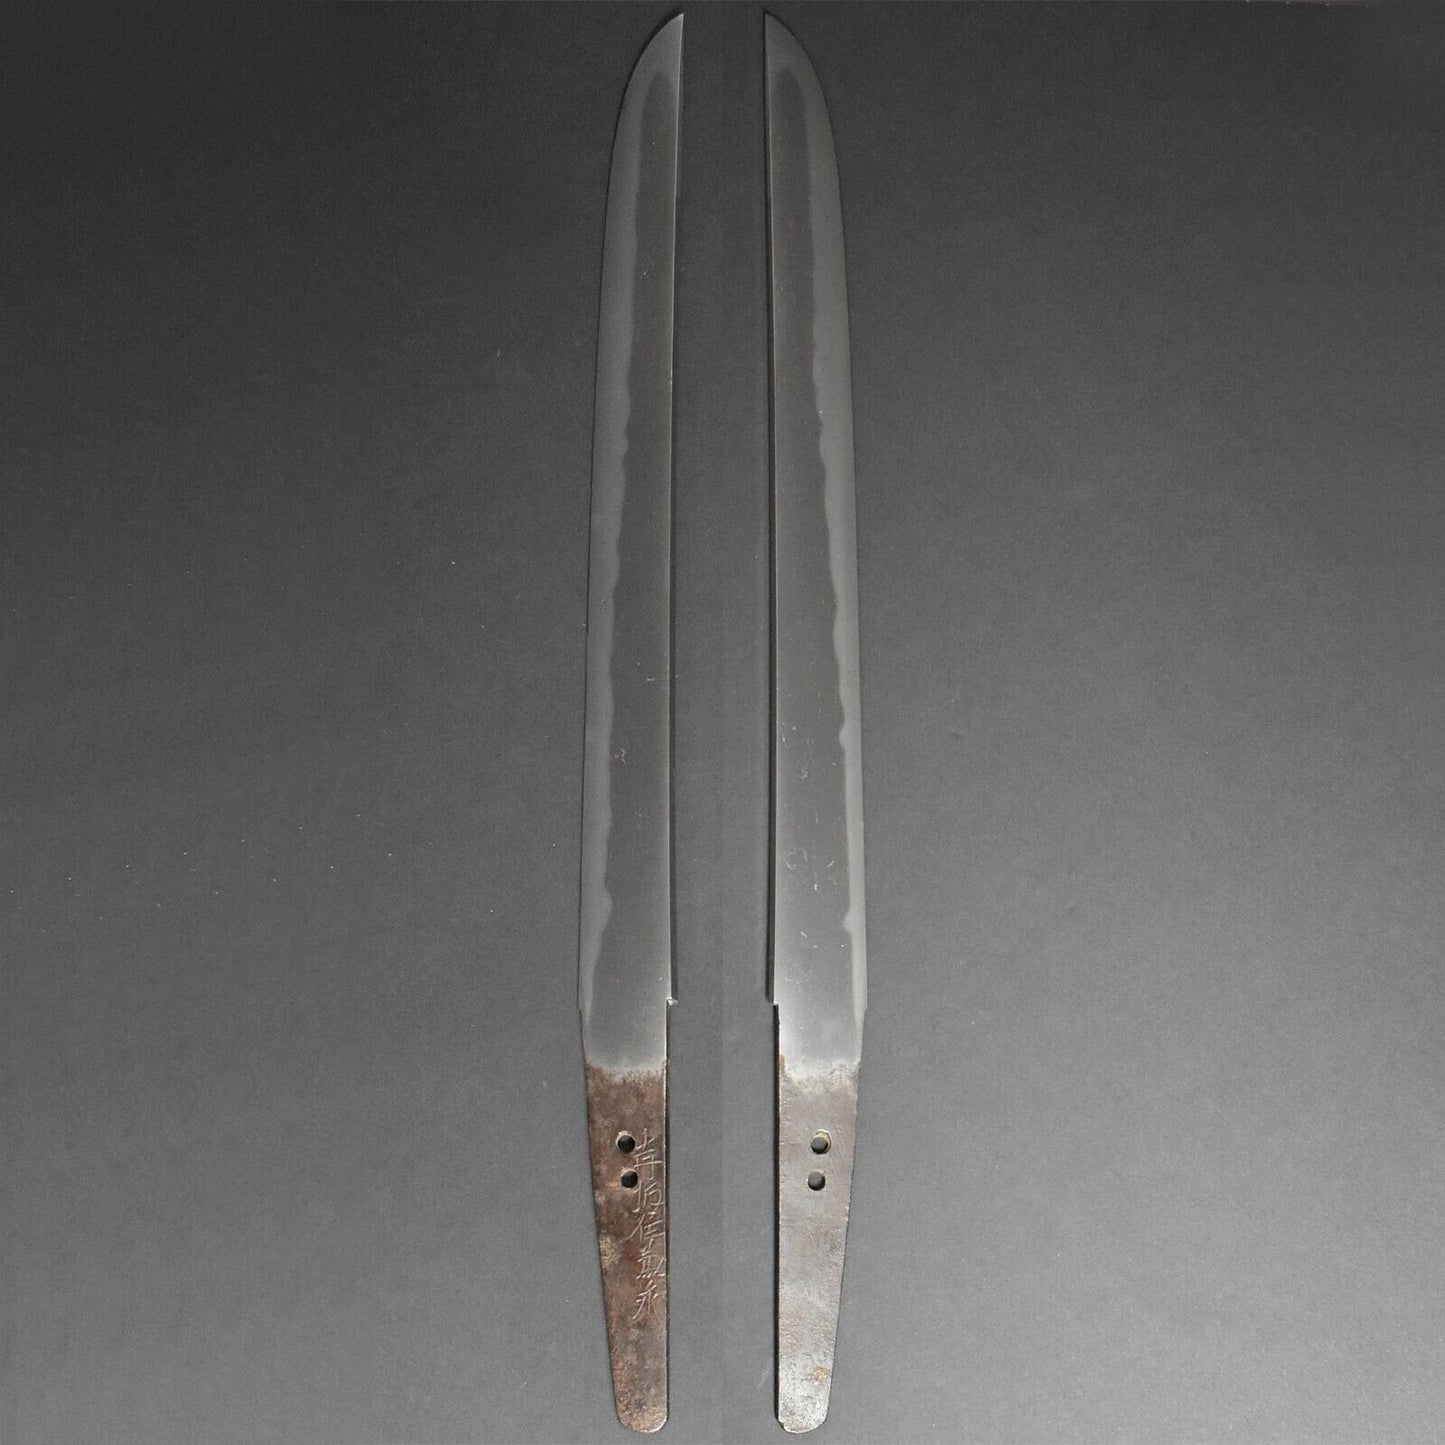 Traditional Japanese Rare Antique Vintage Wakizashi Sword Katana Weapon Unique Asian Tamahagane Steel Nobuyoshi, 21 inches Tall Period.